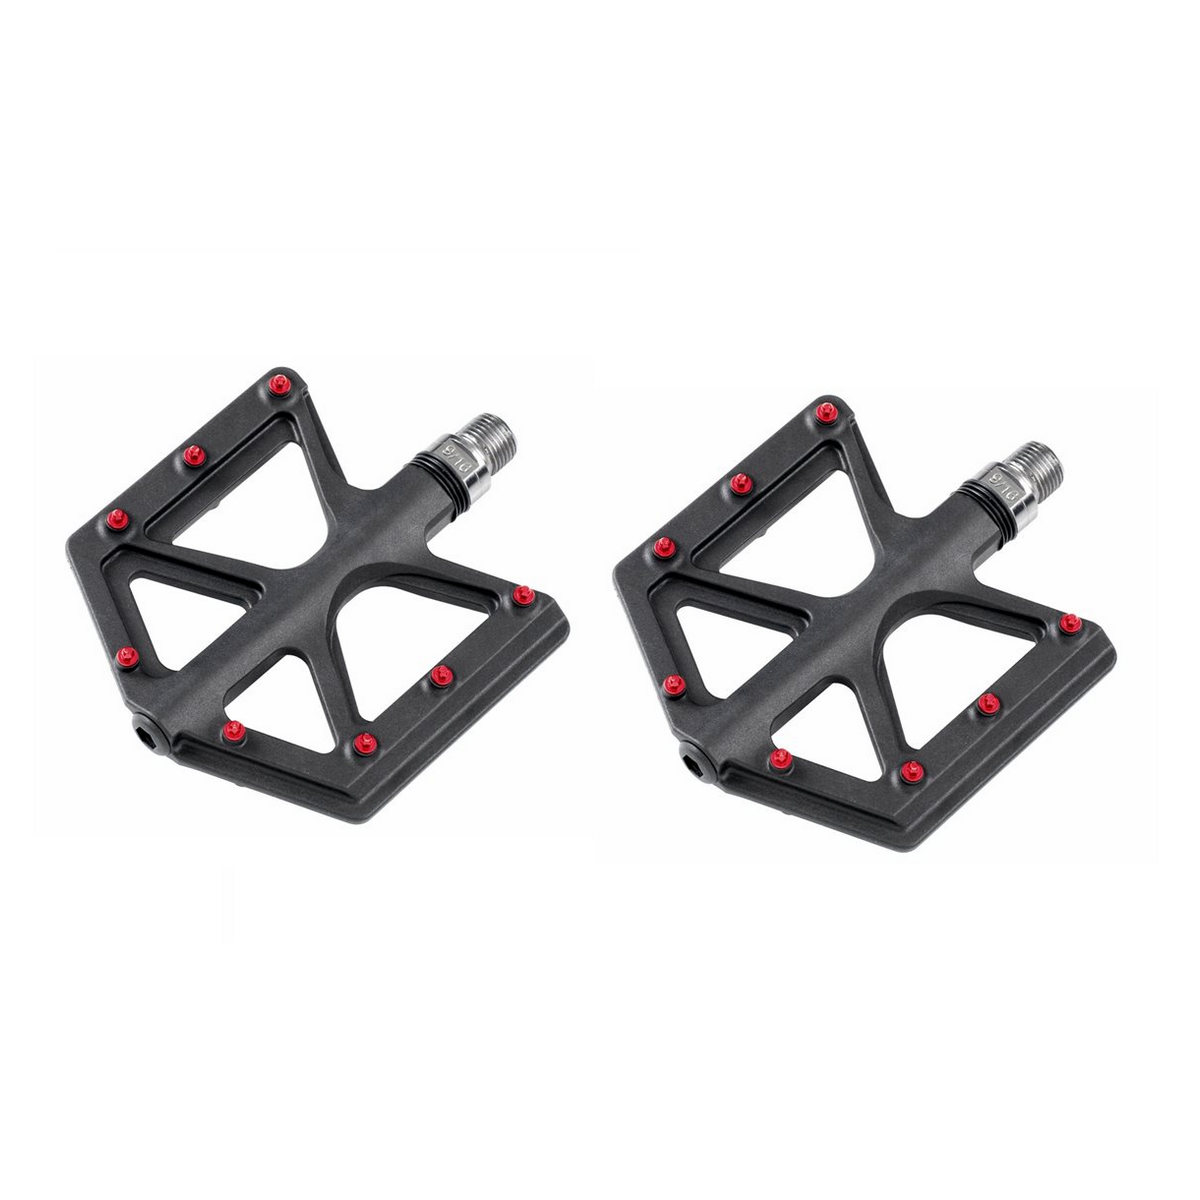 Pair flat pedals ZP-D213 anti-slip ultralight carbon / resin